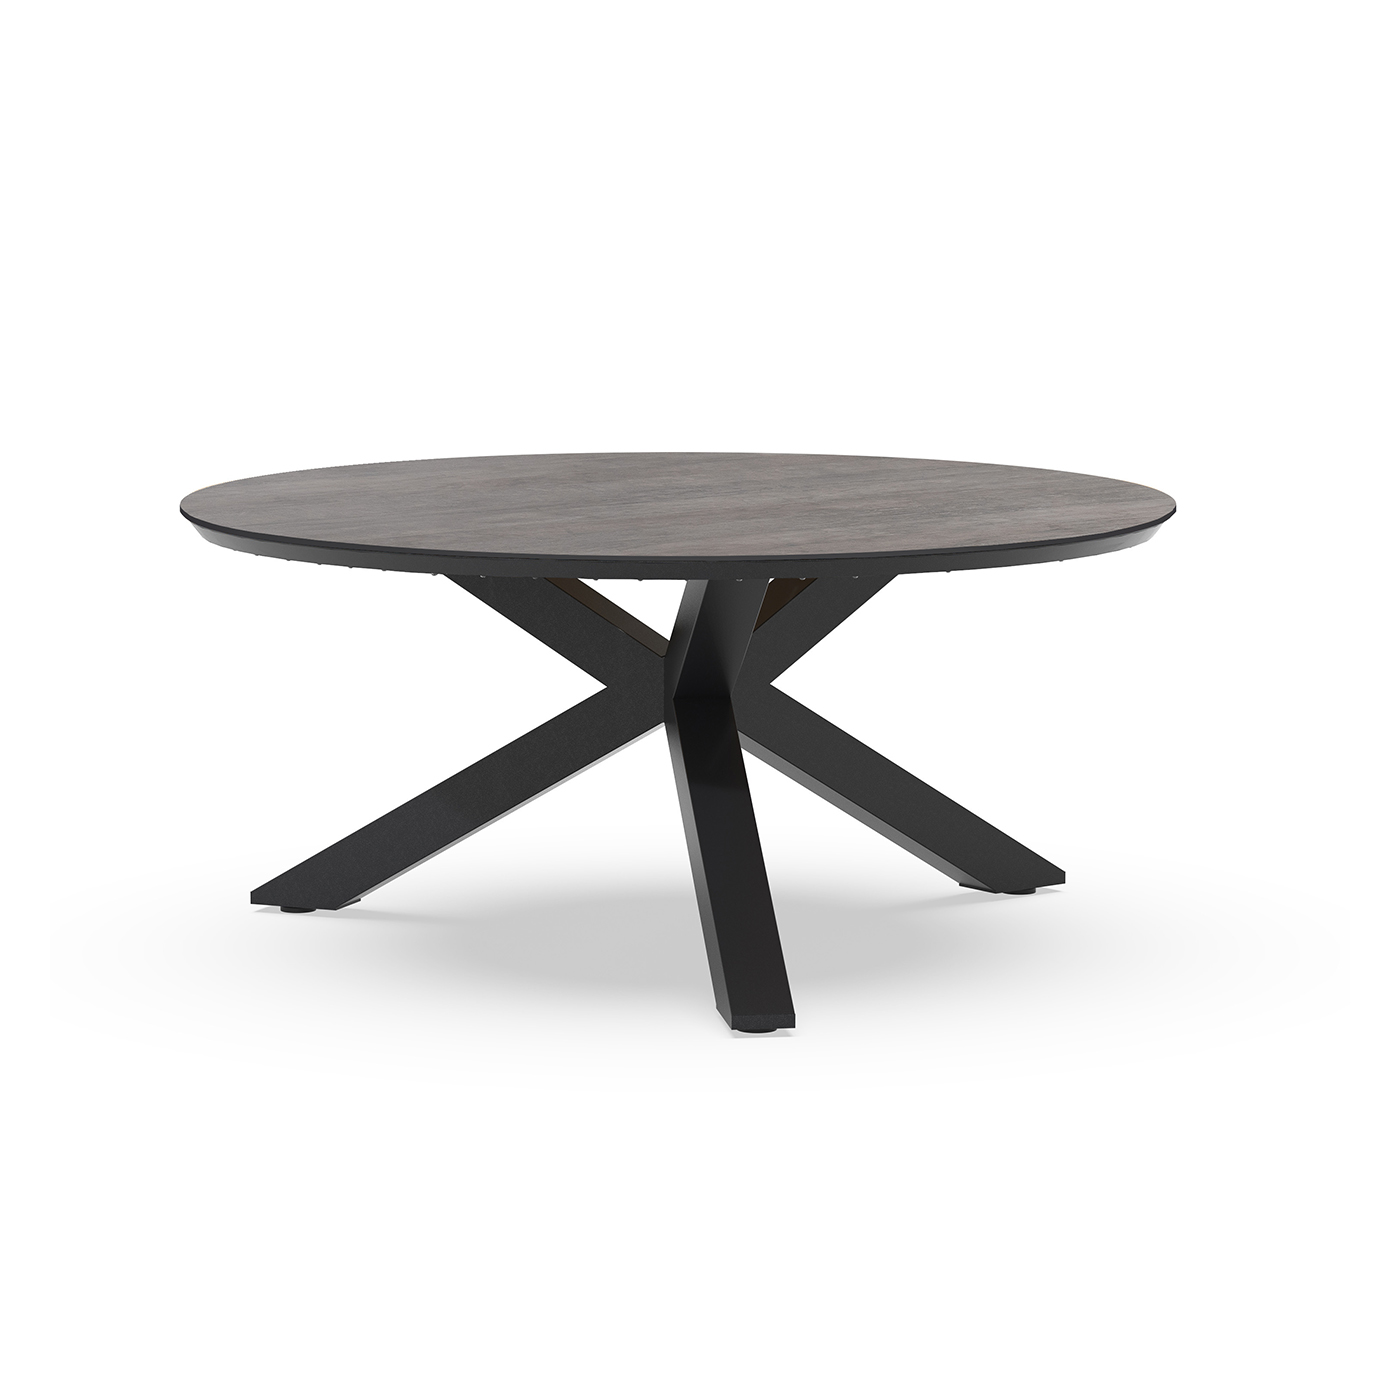 Omnigo Low Dining Table Trespa Forest Grey 150 cm Ø Charcoal